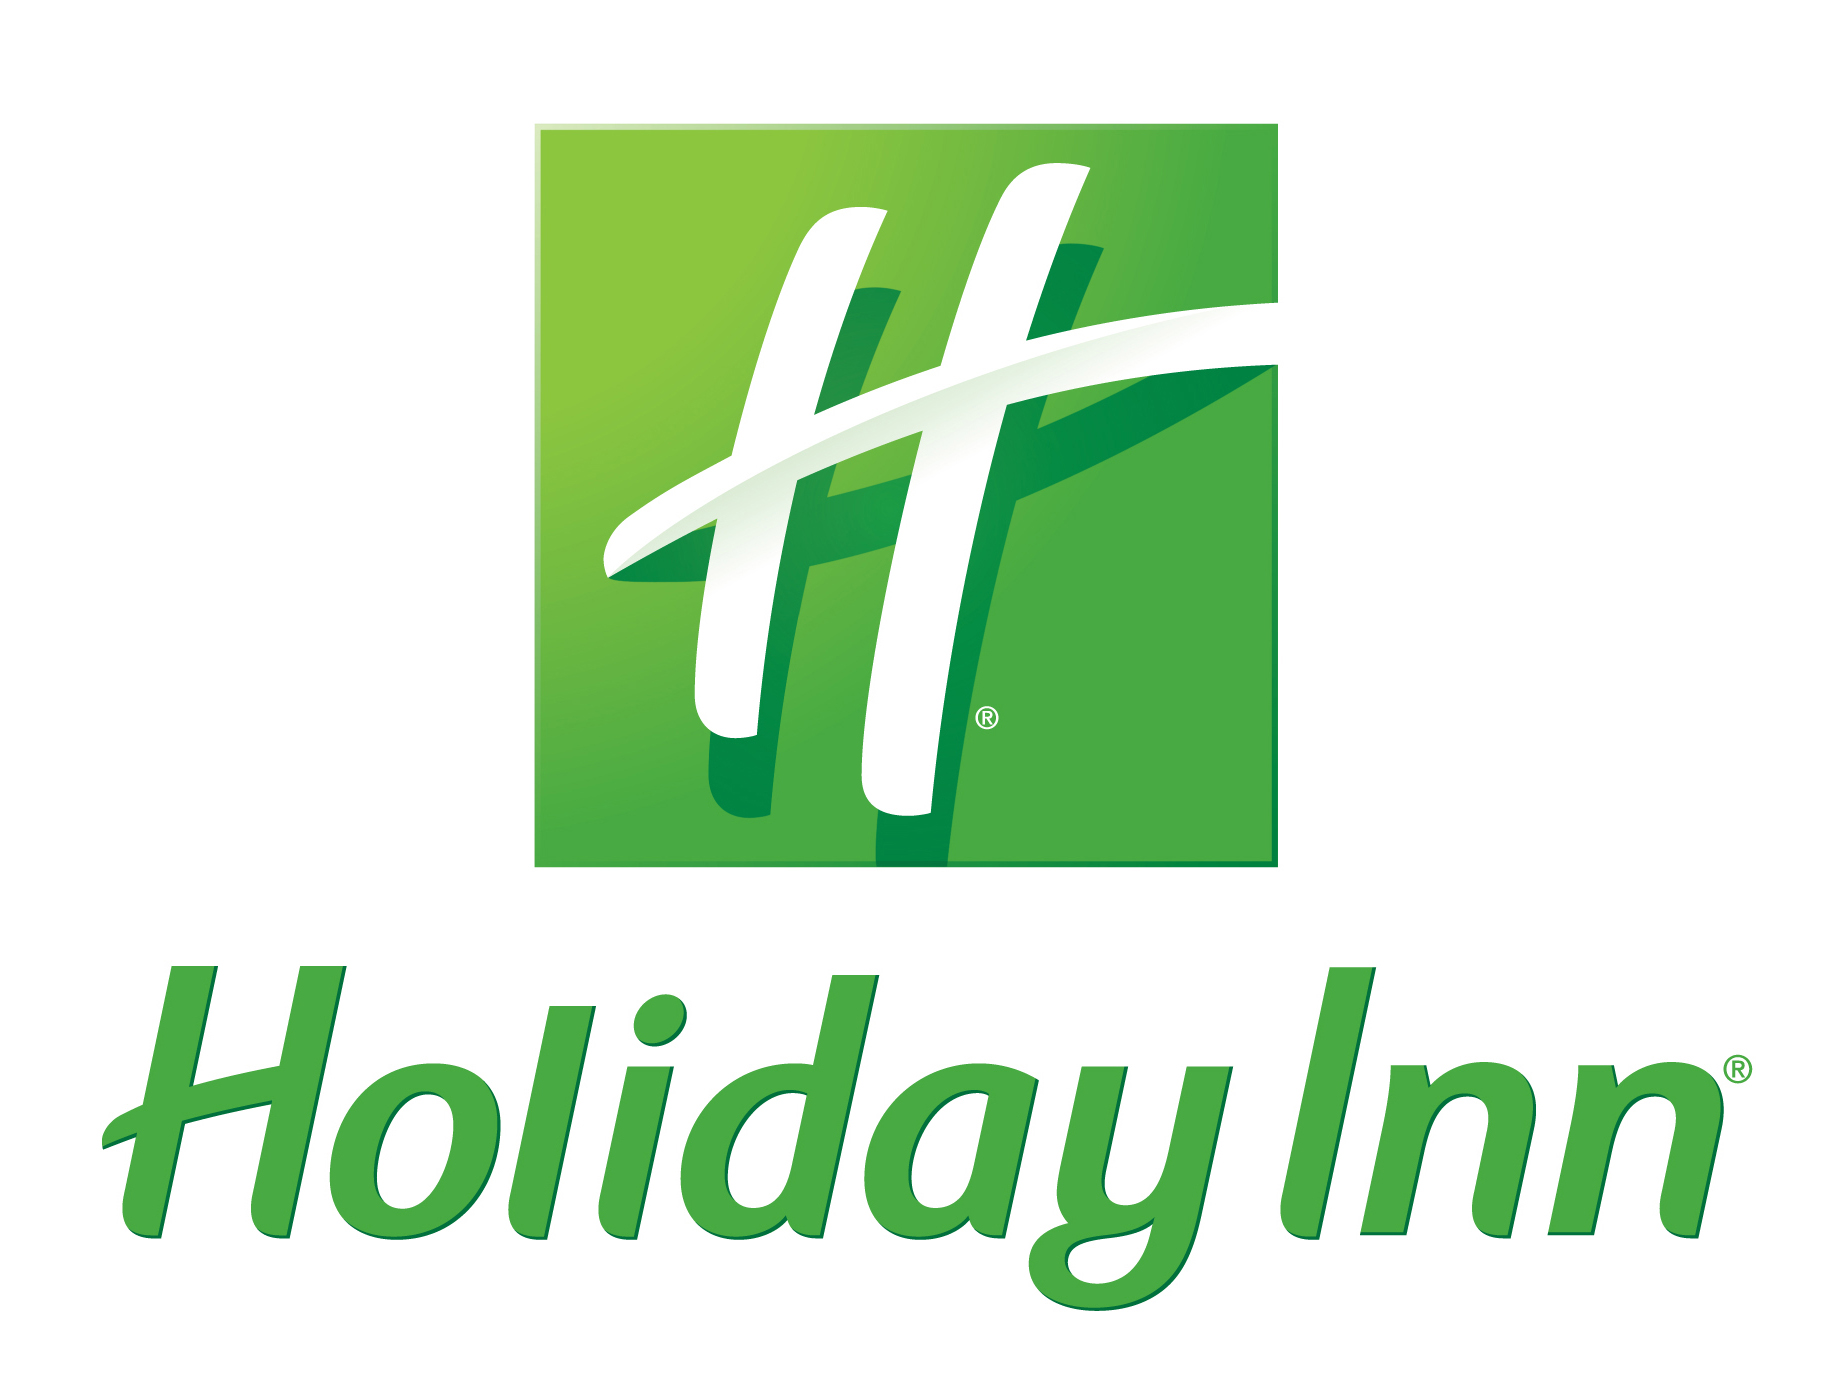 Holiday Inn - Logo